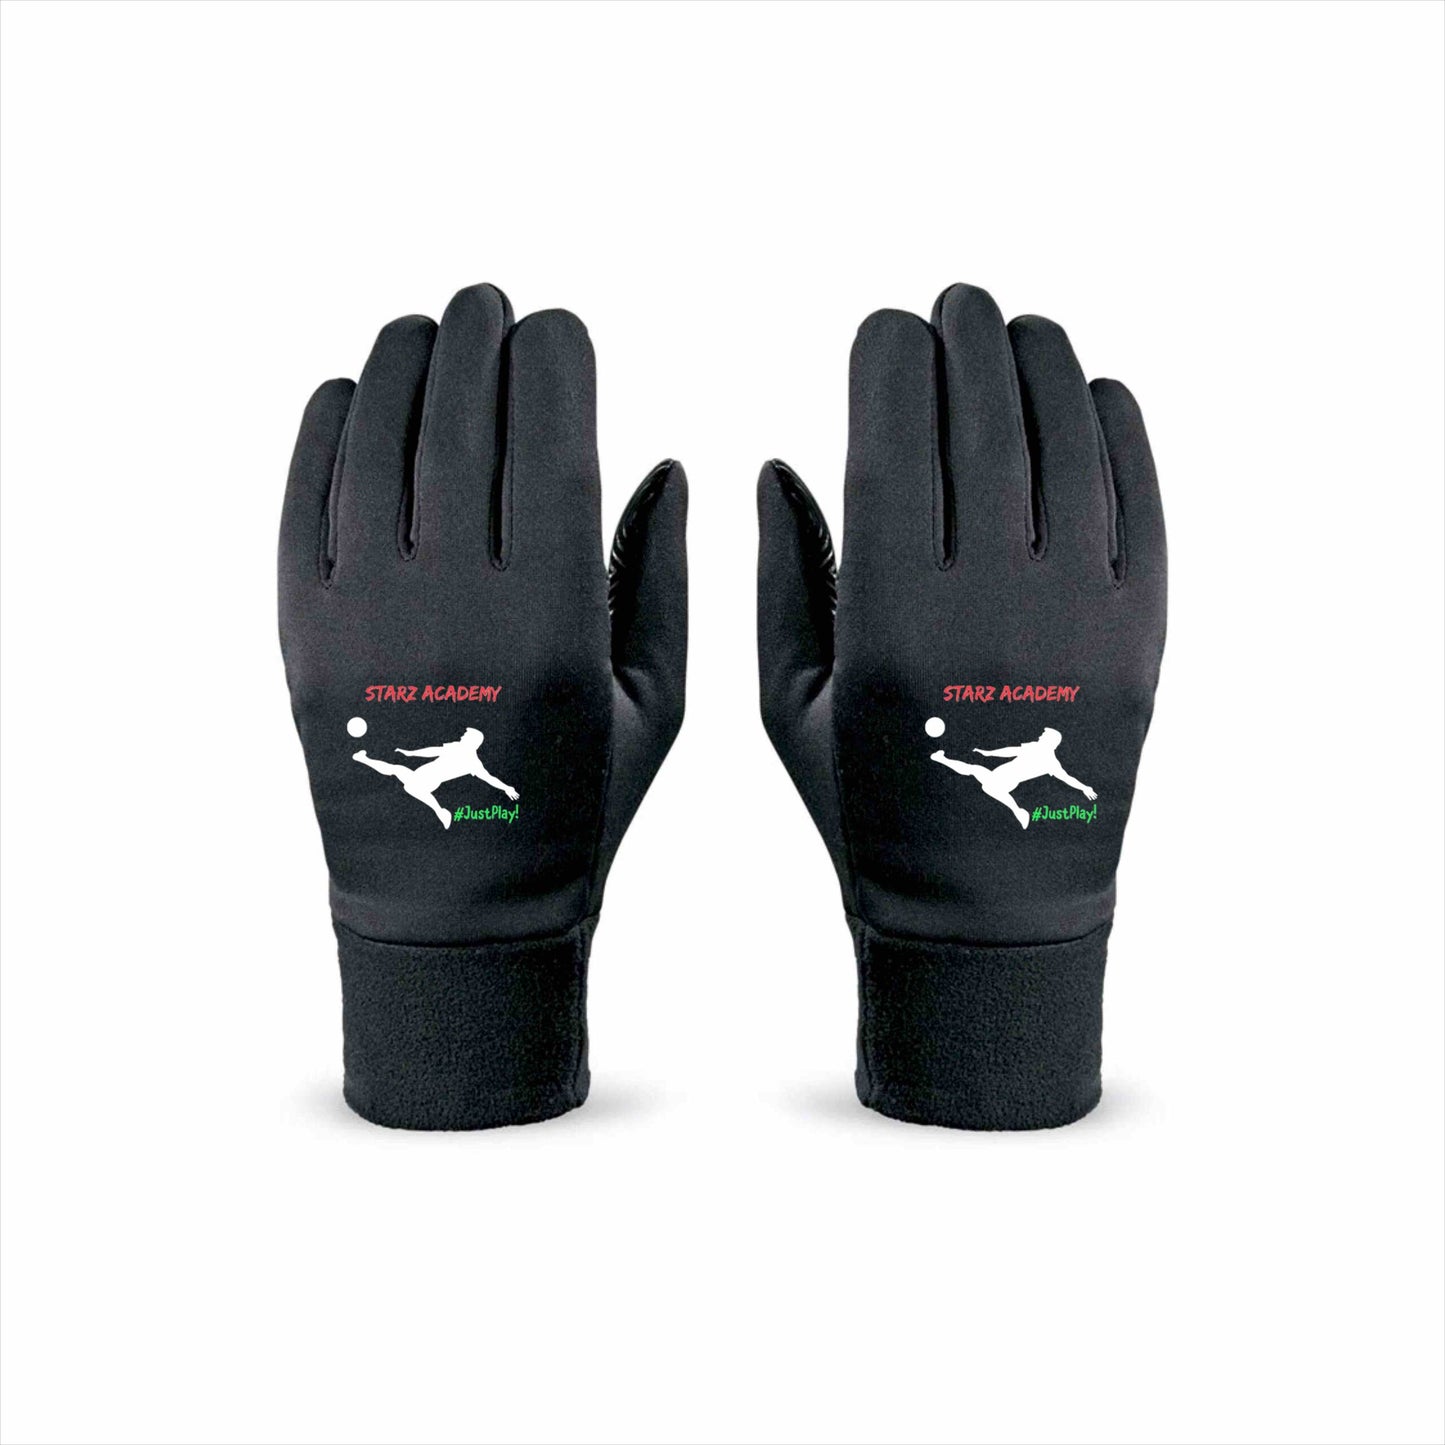 Starz Academy Player Gloves